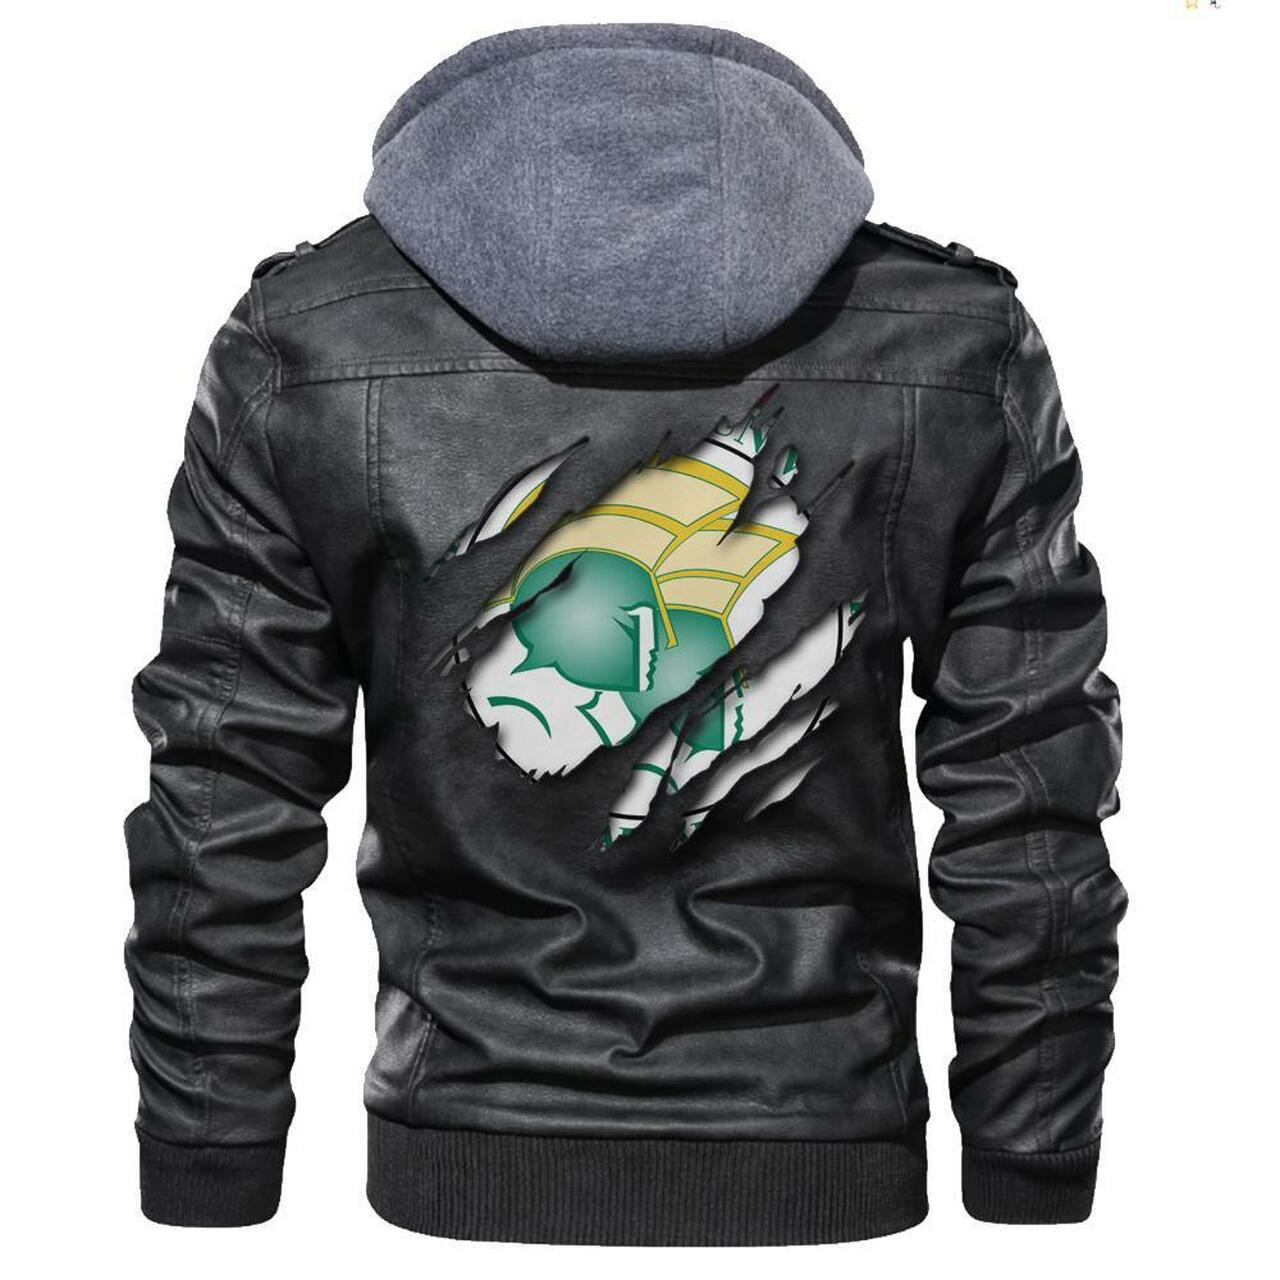 Top leather jacket Sells Best on Techcomshop 115